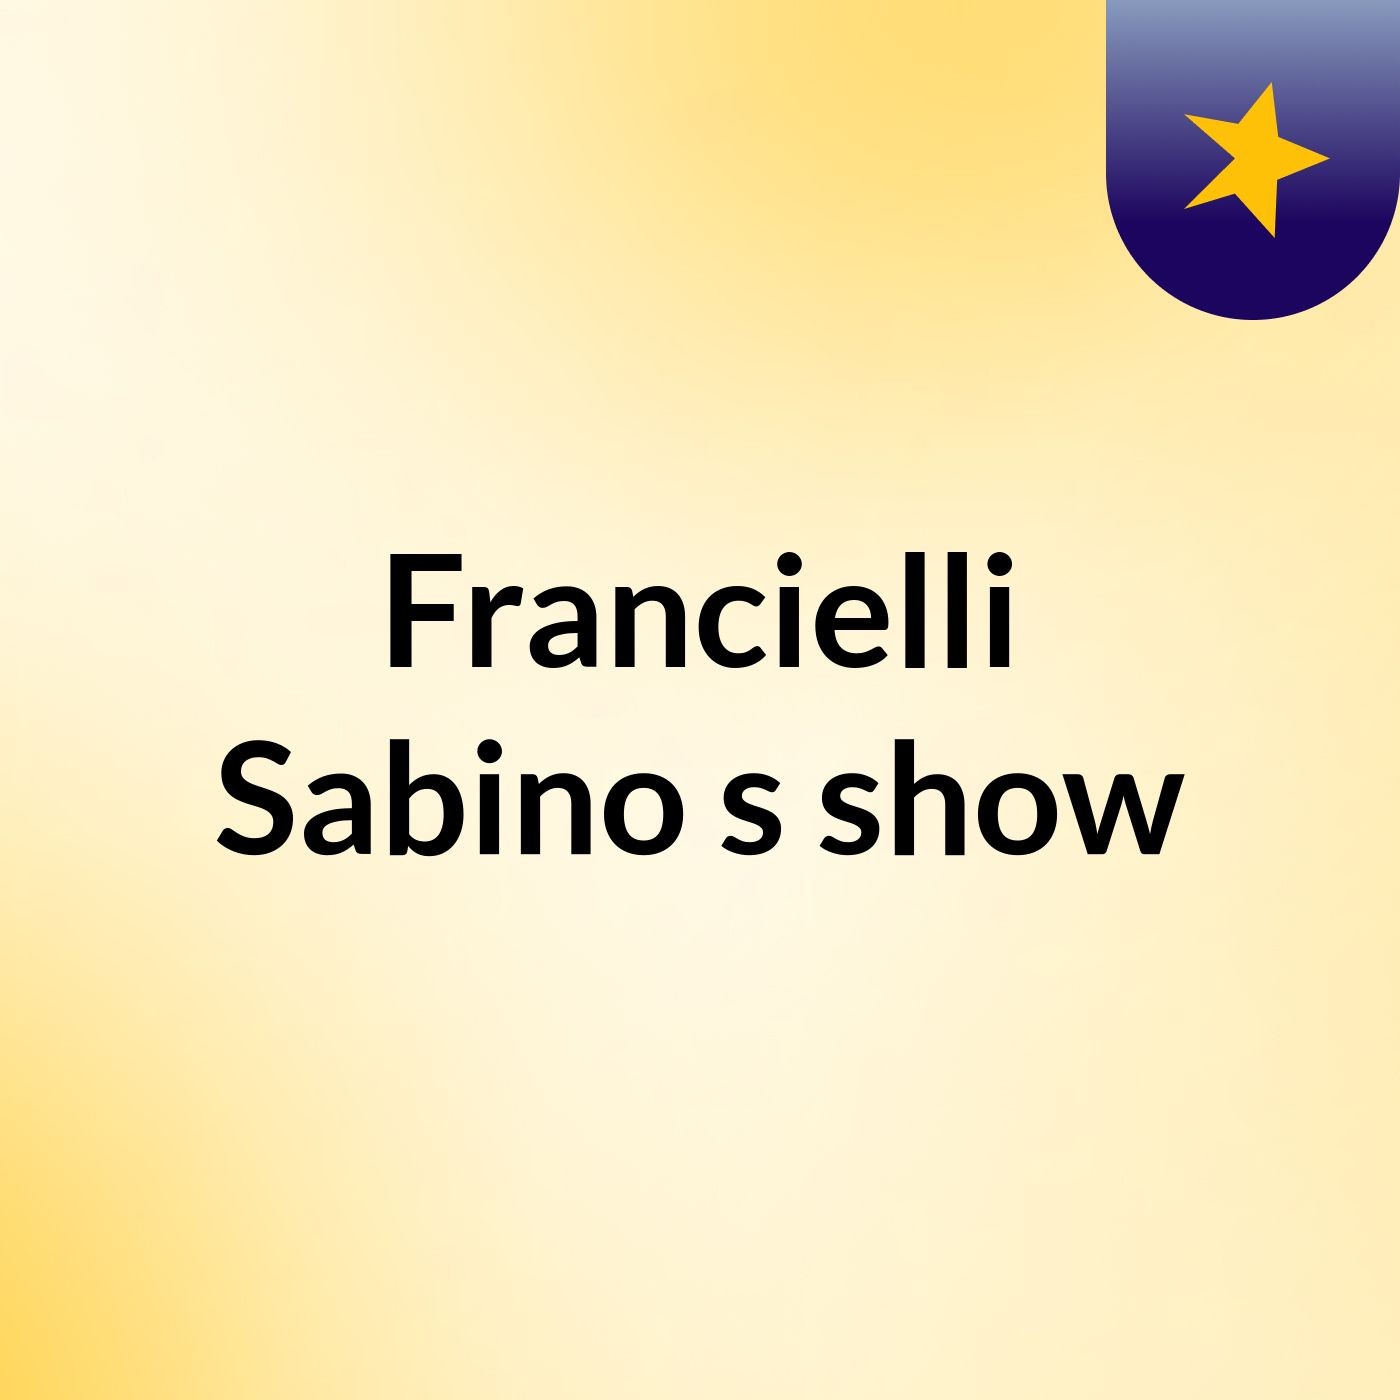 Francielli Sabino's show